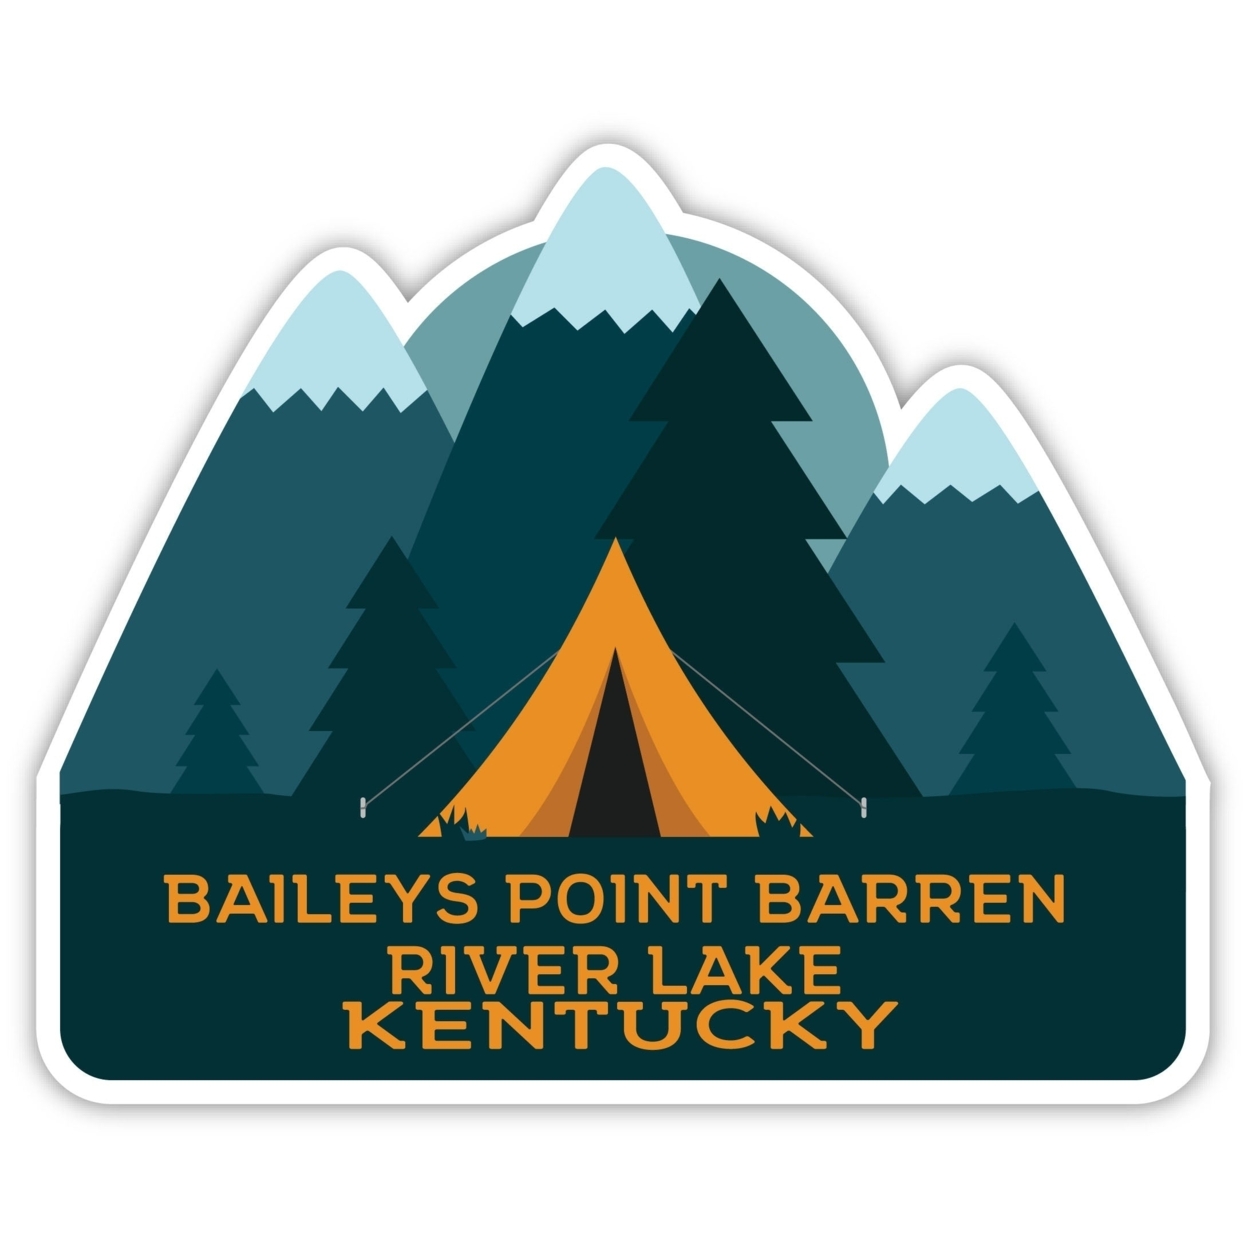 Baileys Point Barren River Lake Kentucky Souvenir Decorative Stickers (Choose Theme And Size) - Single Unit, 10-Inch, Tent